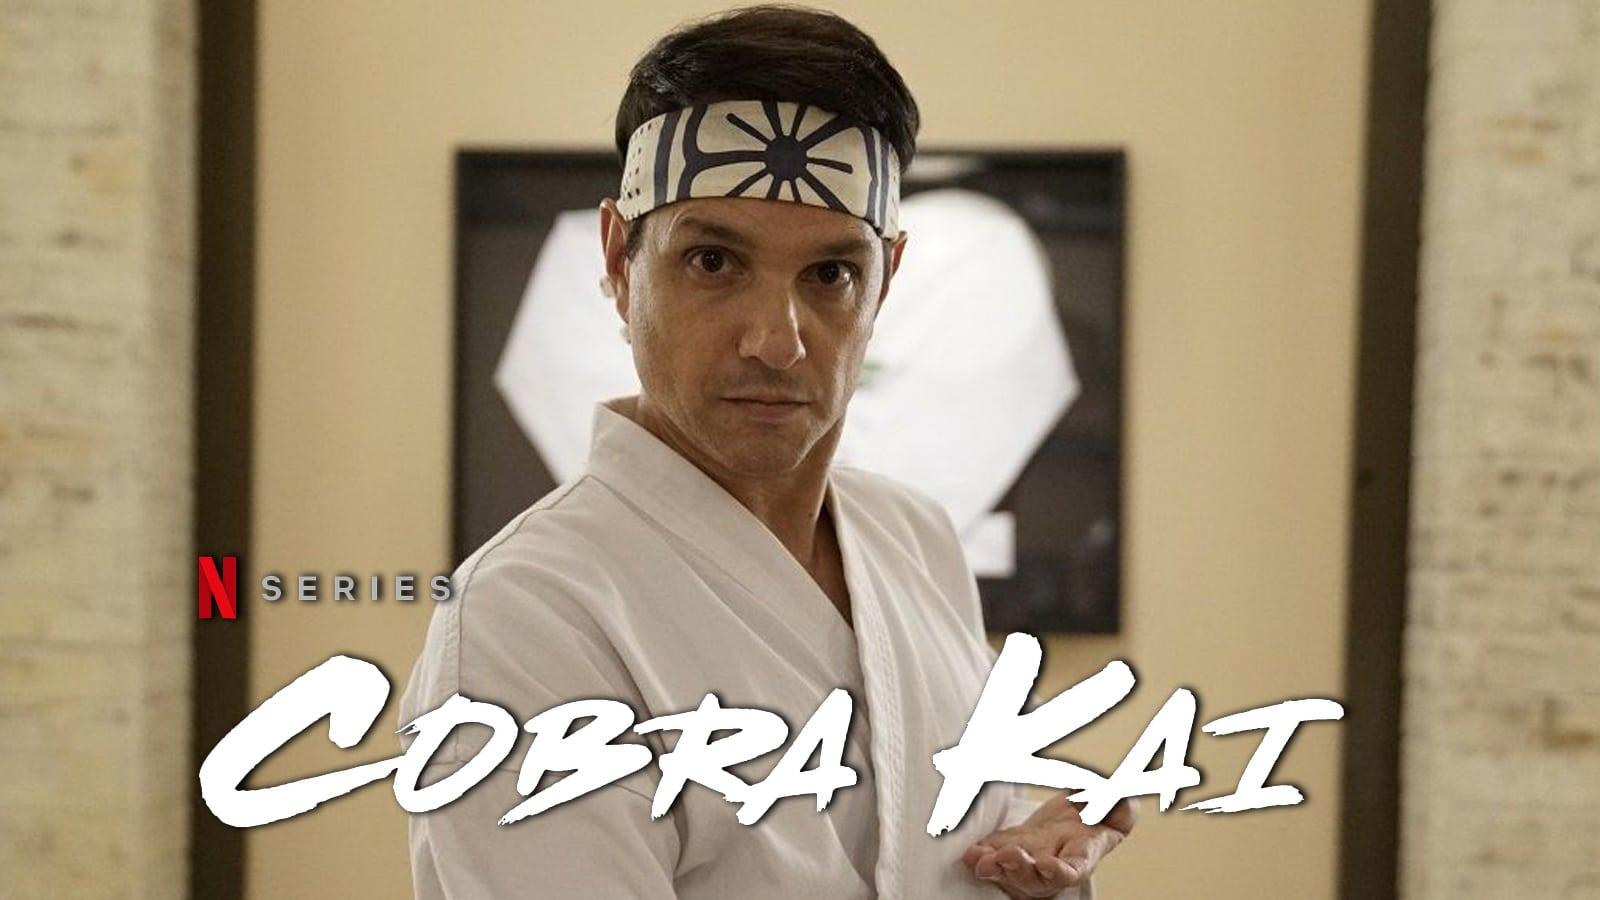 Cobra Kai Season 6 release date announcement: When can fans expect the  announcement for the last season?